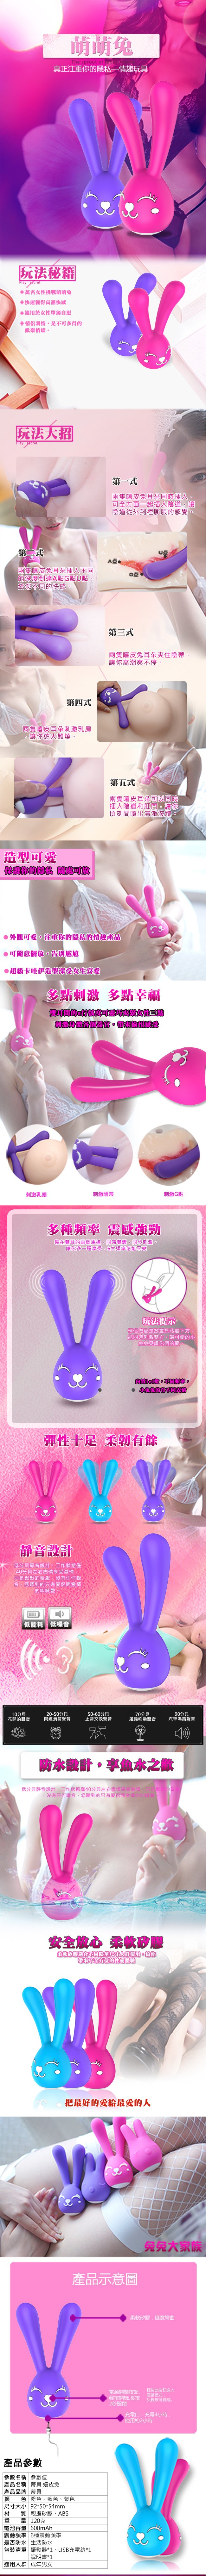 Dibe-嬉皮兔 6段變頻USB充電矽膠防水震動器-紫(特)